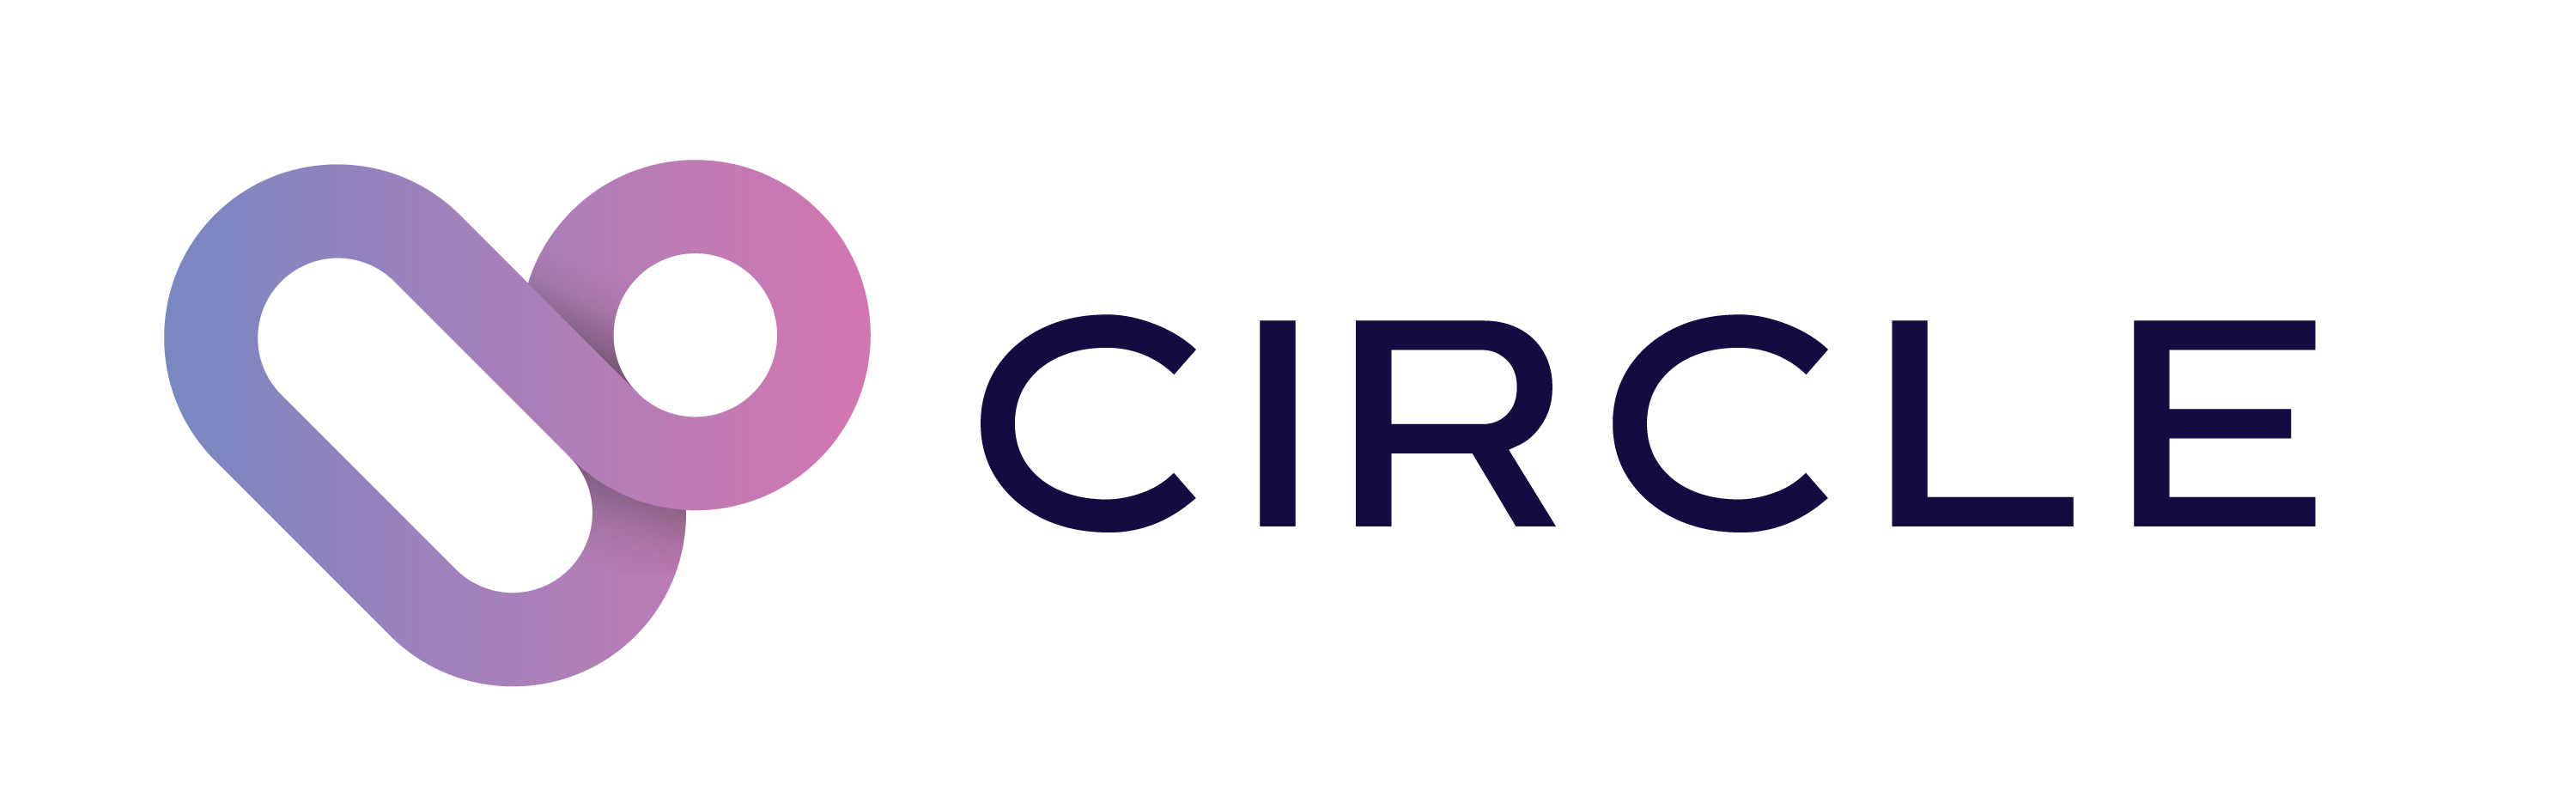 v-circle-logo-color-horizontal(CMYK).png